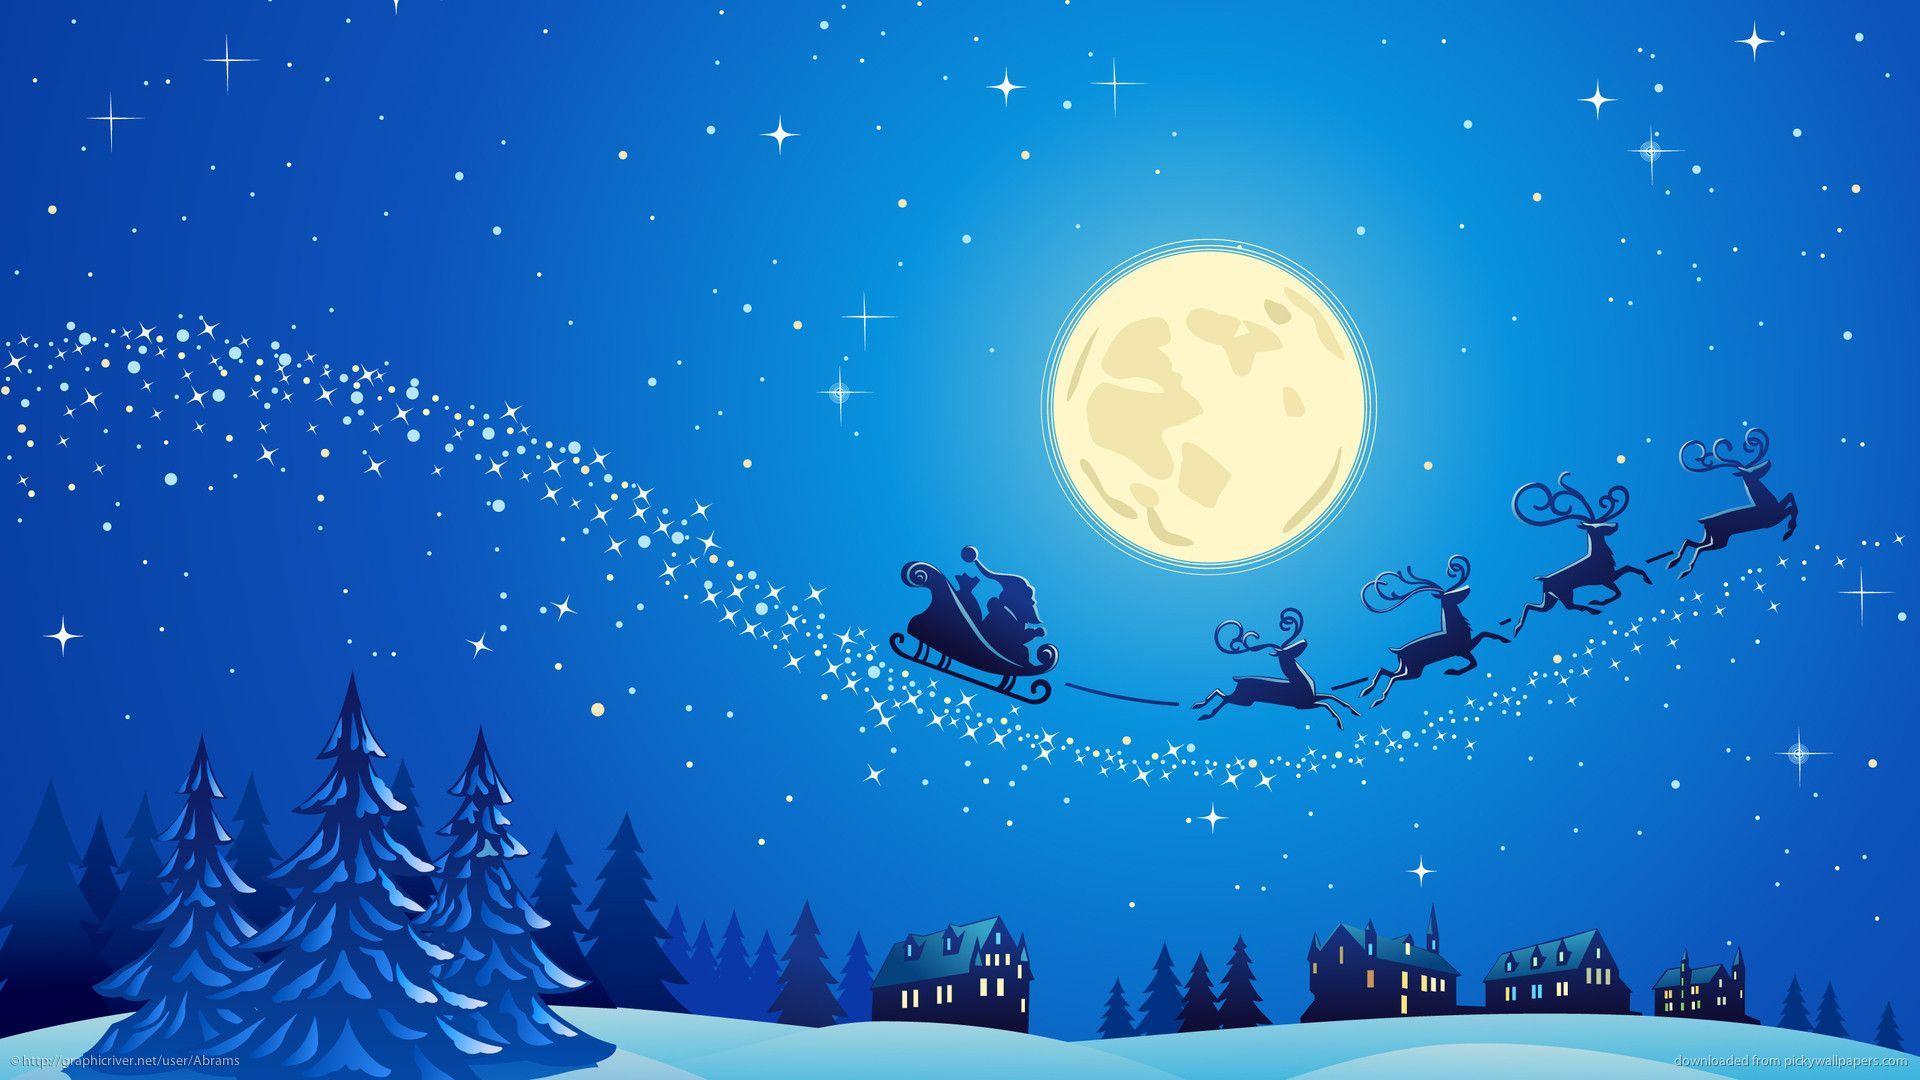 Download 1920x1080 Santa Into The Winter Christmas Night 2 Wallpaper